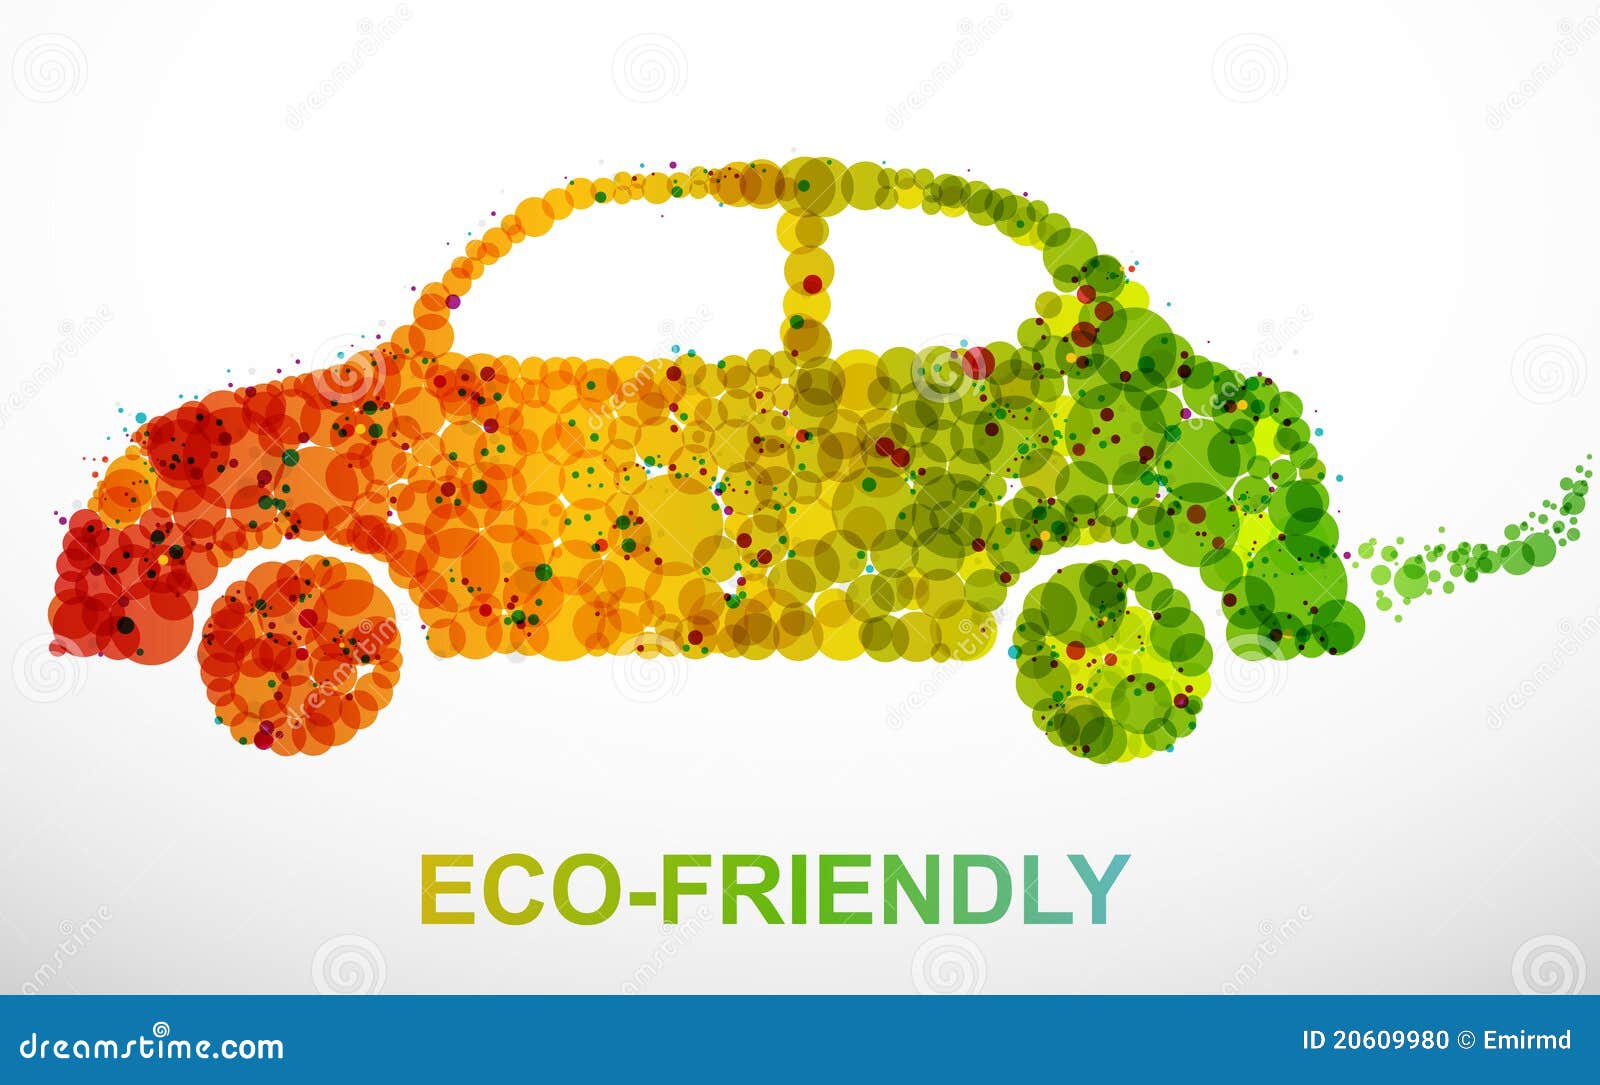 ecological car